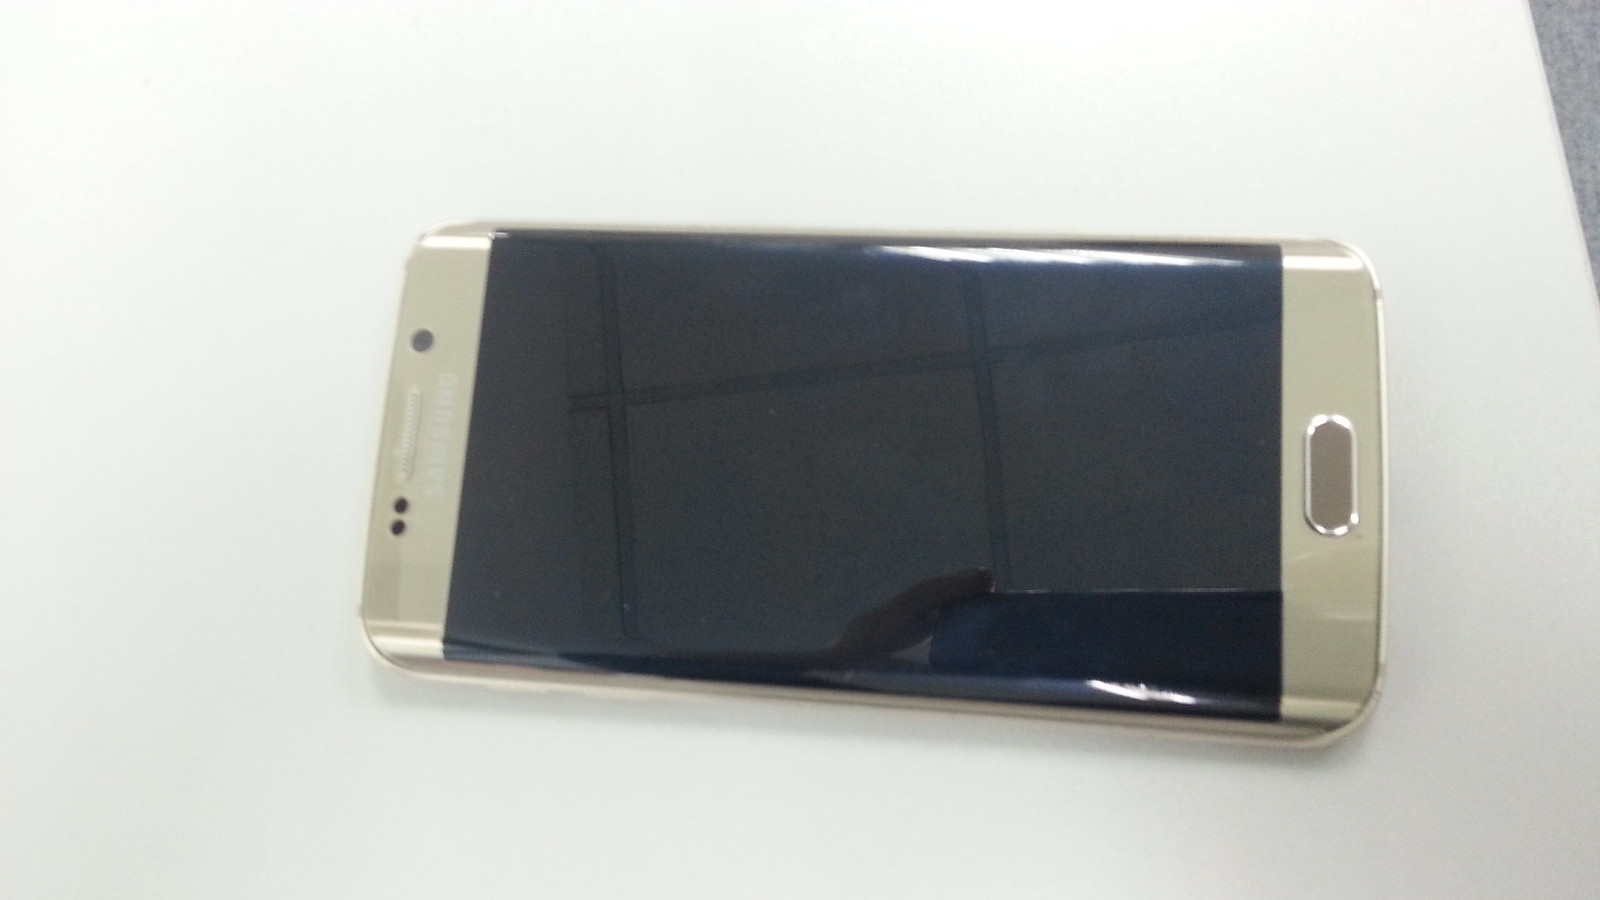 Samsung Galaxy S6 Edge GOLD - 64GB hàng QT MỸ 99% full box. - 1